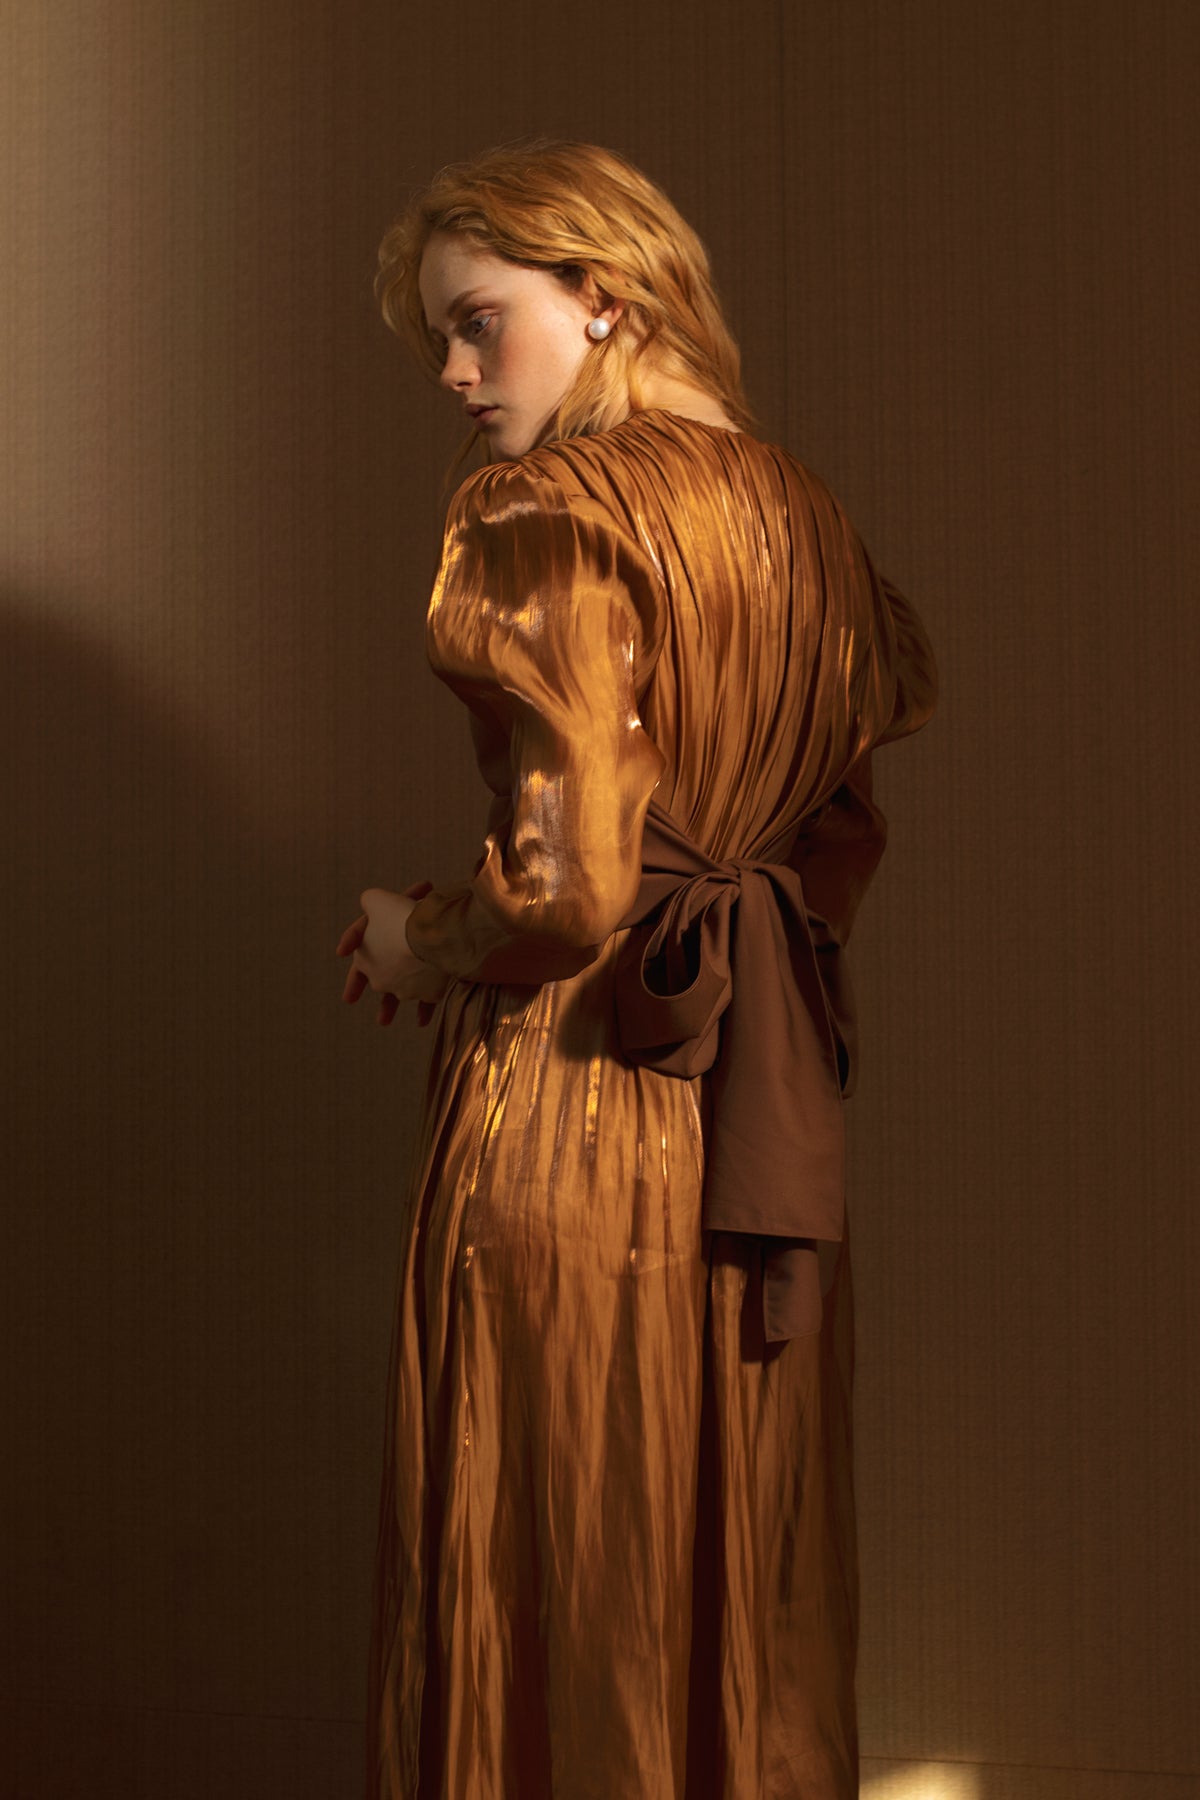 Winifred Corset Dress in Copper